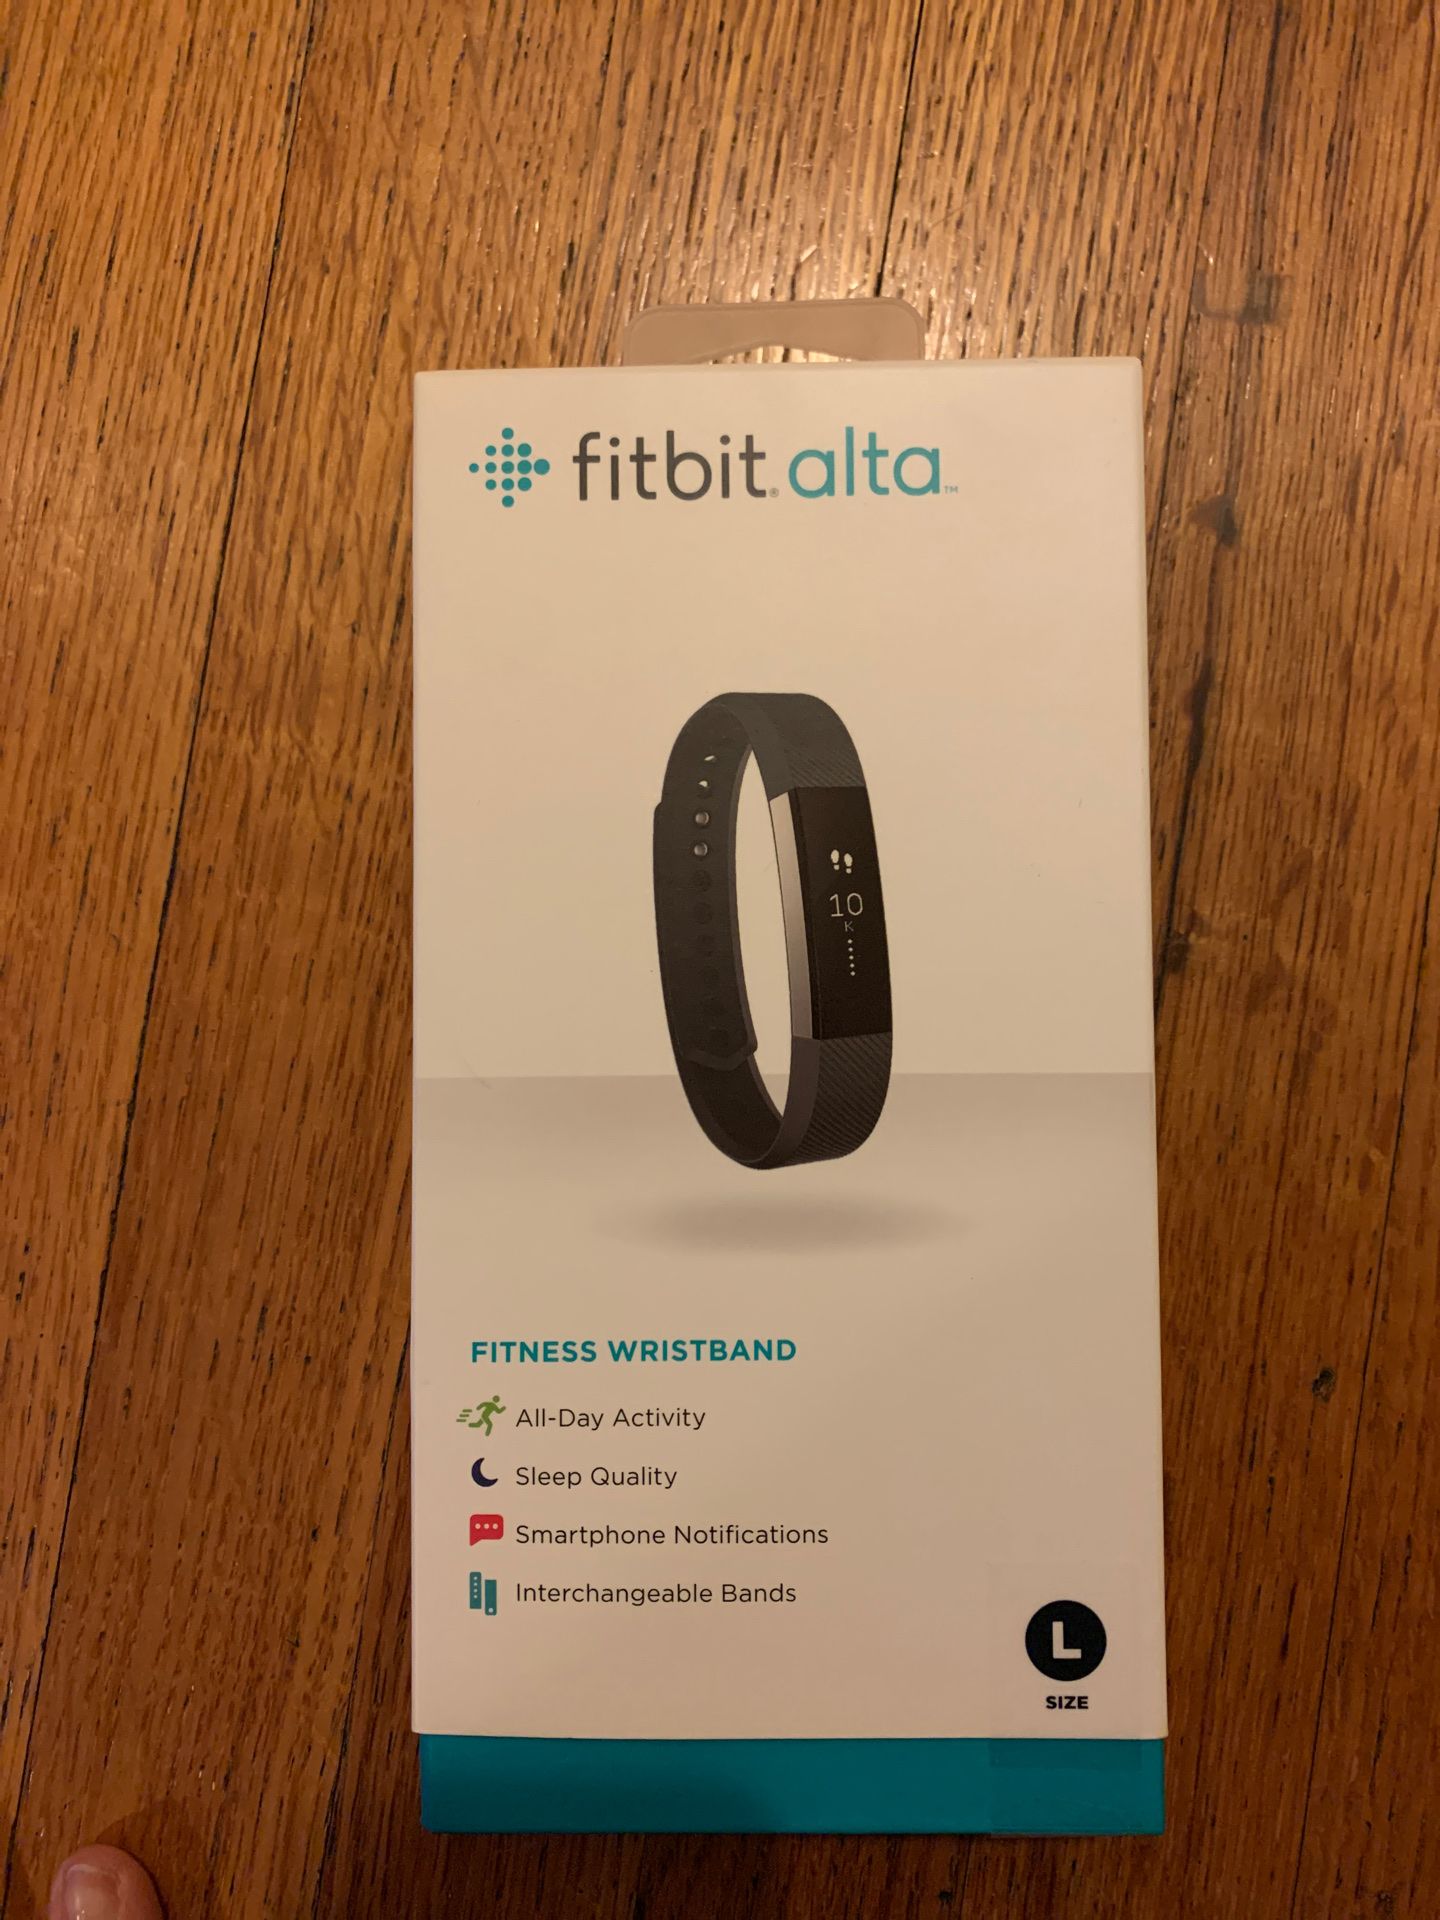 FITBIT ALTA Fitness Tracker - brand new in box